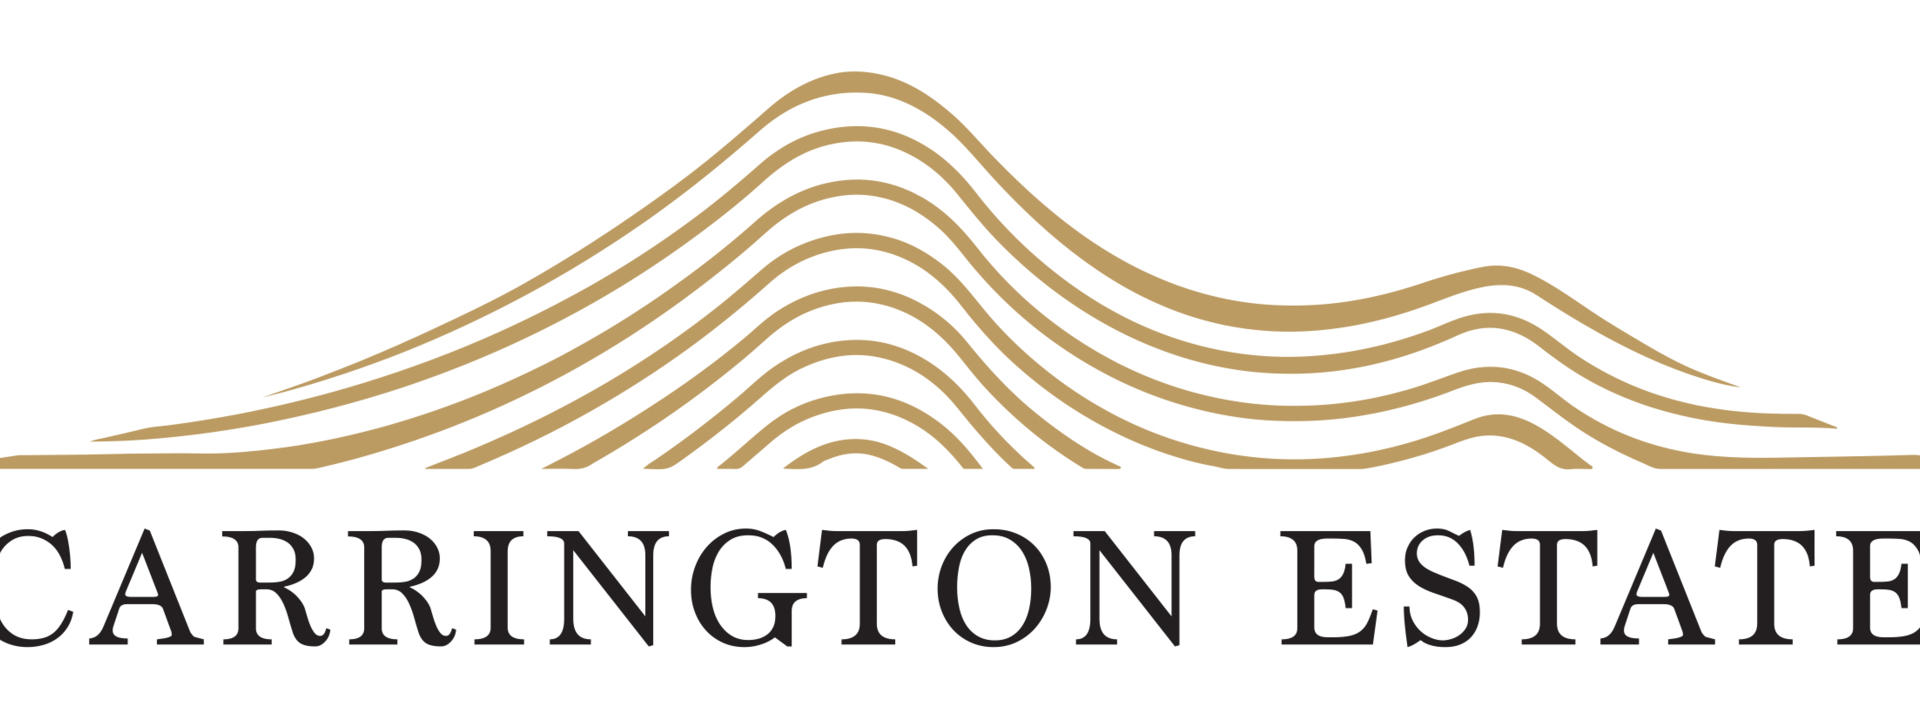 1. Carrington Estate logo.jpg